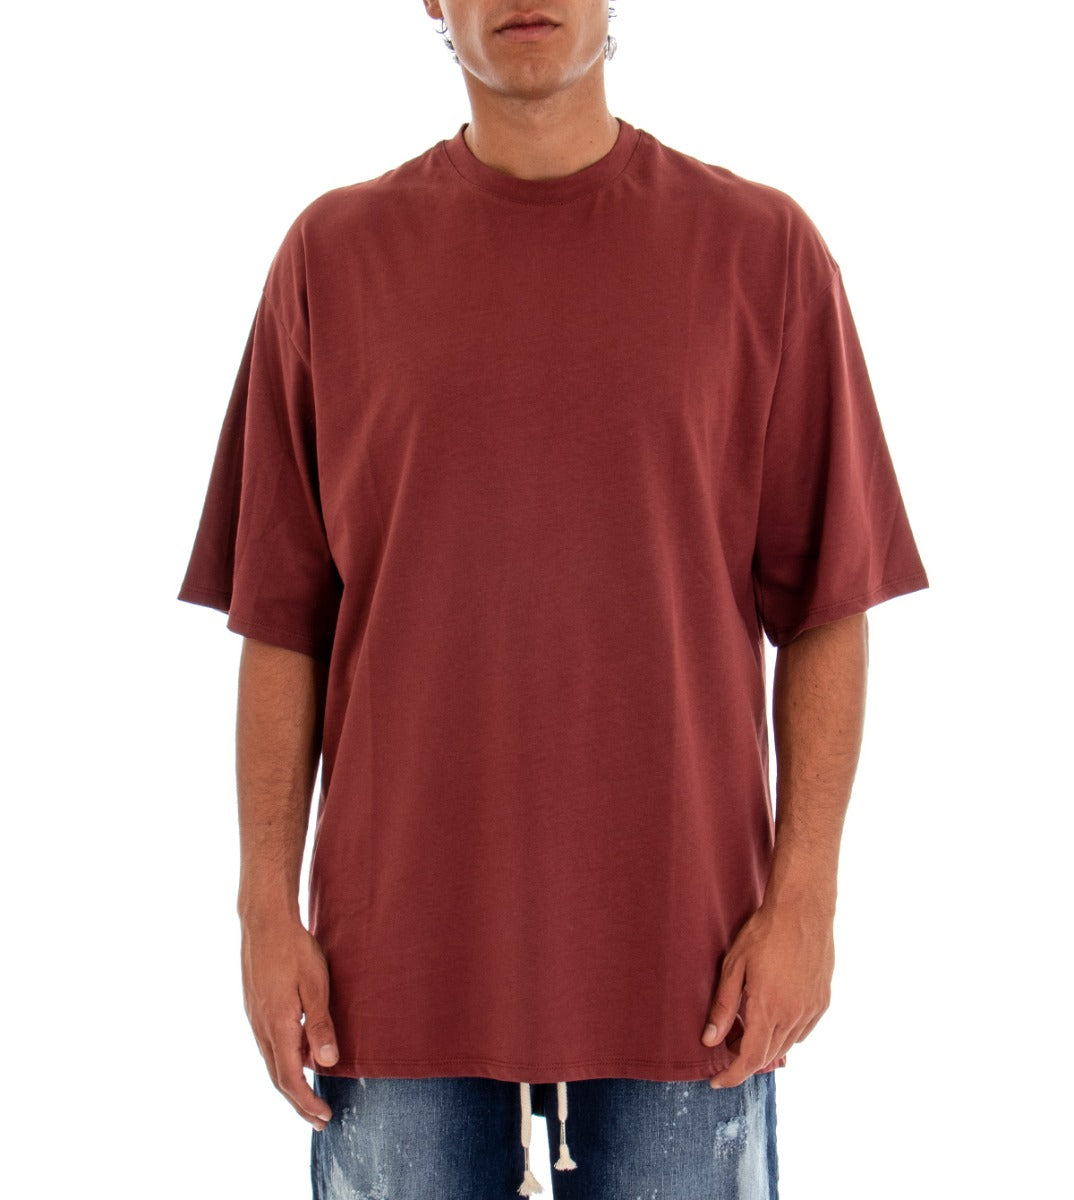 Men's T-shirt Short Sleeve Over Shirt Solid Color Bordeaux Retro Print GIOSAL